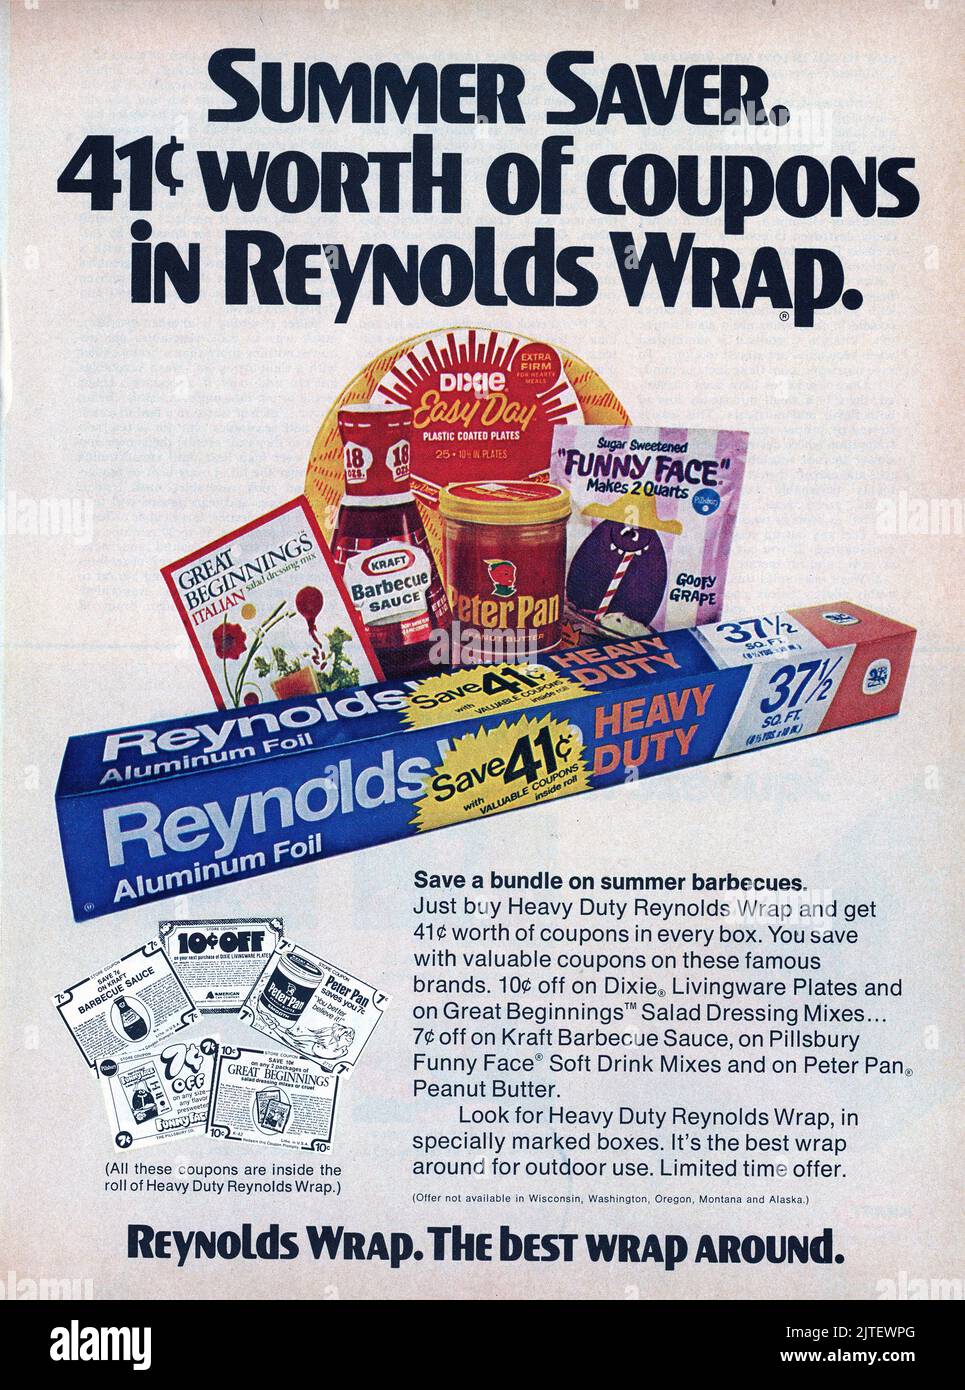 26 Reynolds Wrap Images, Stock Photos, 3D objects, & Vectors